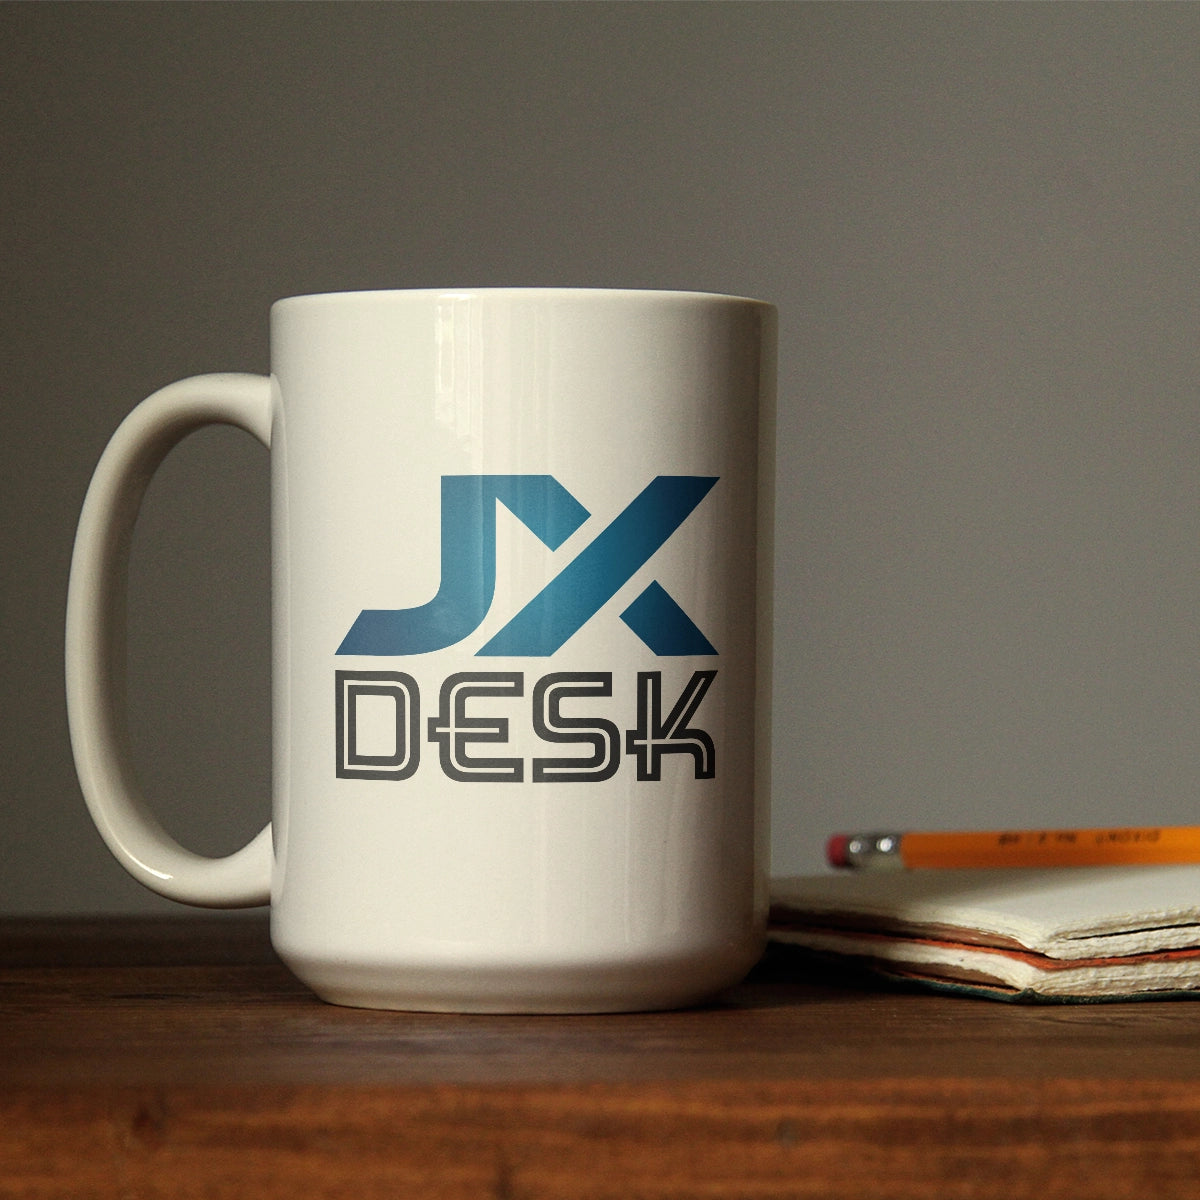 jxdesk.com